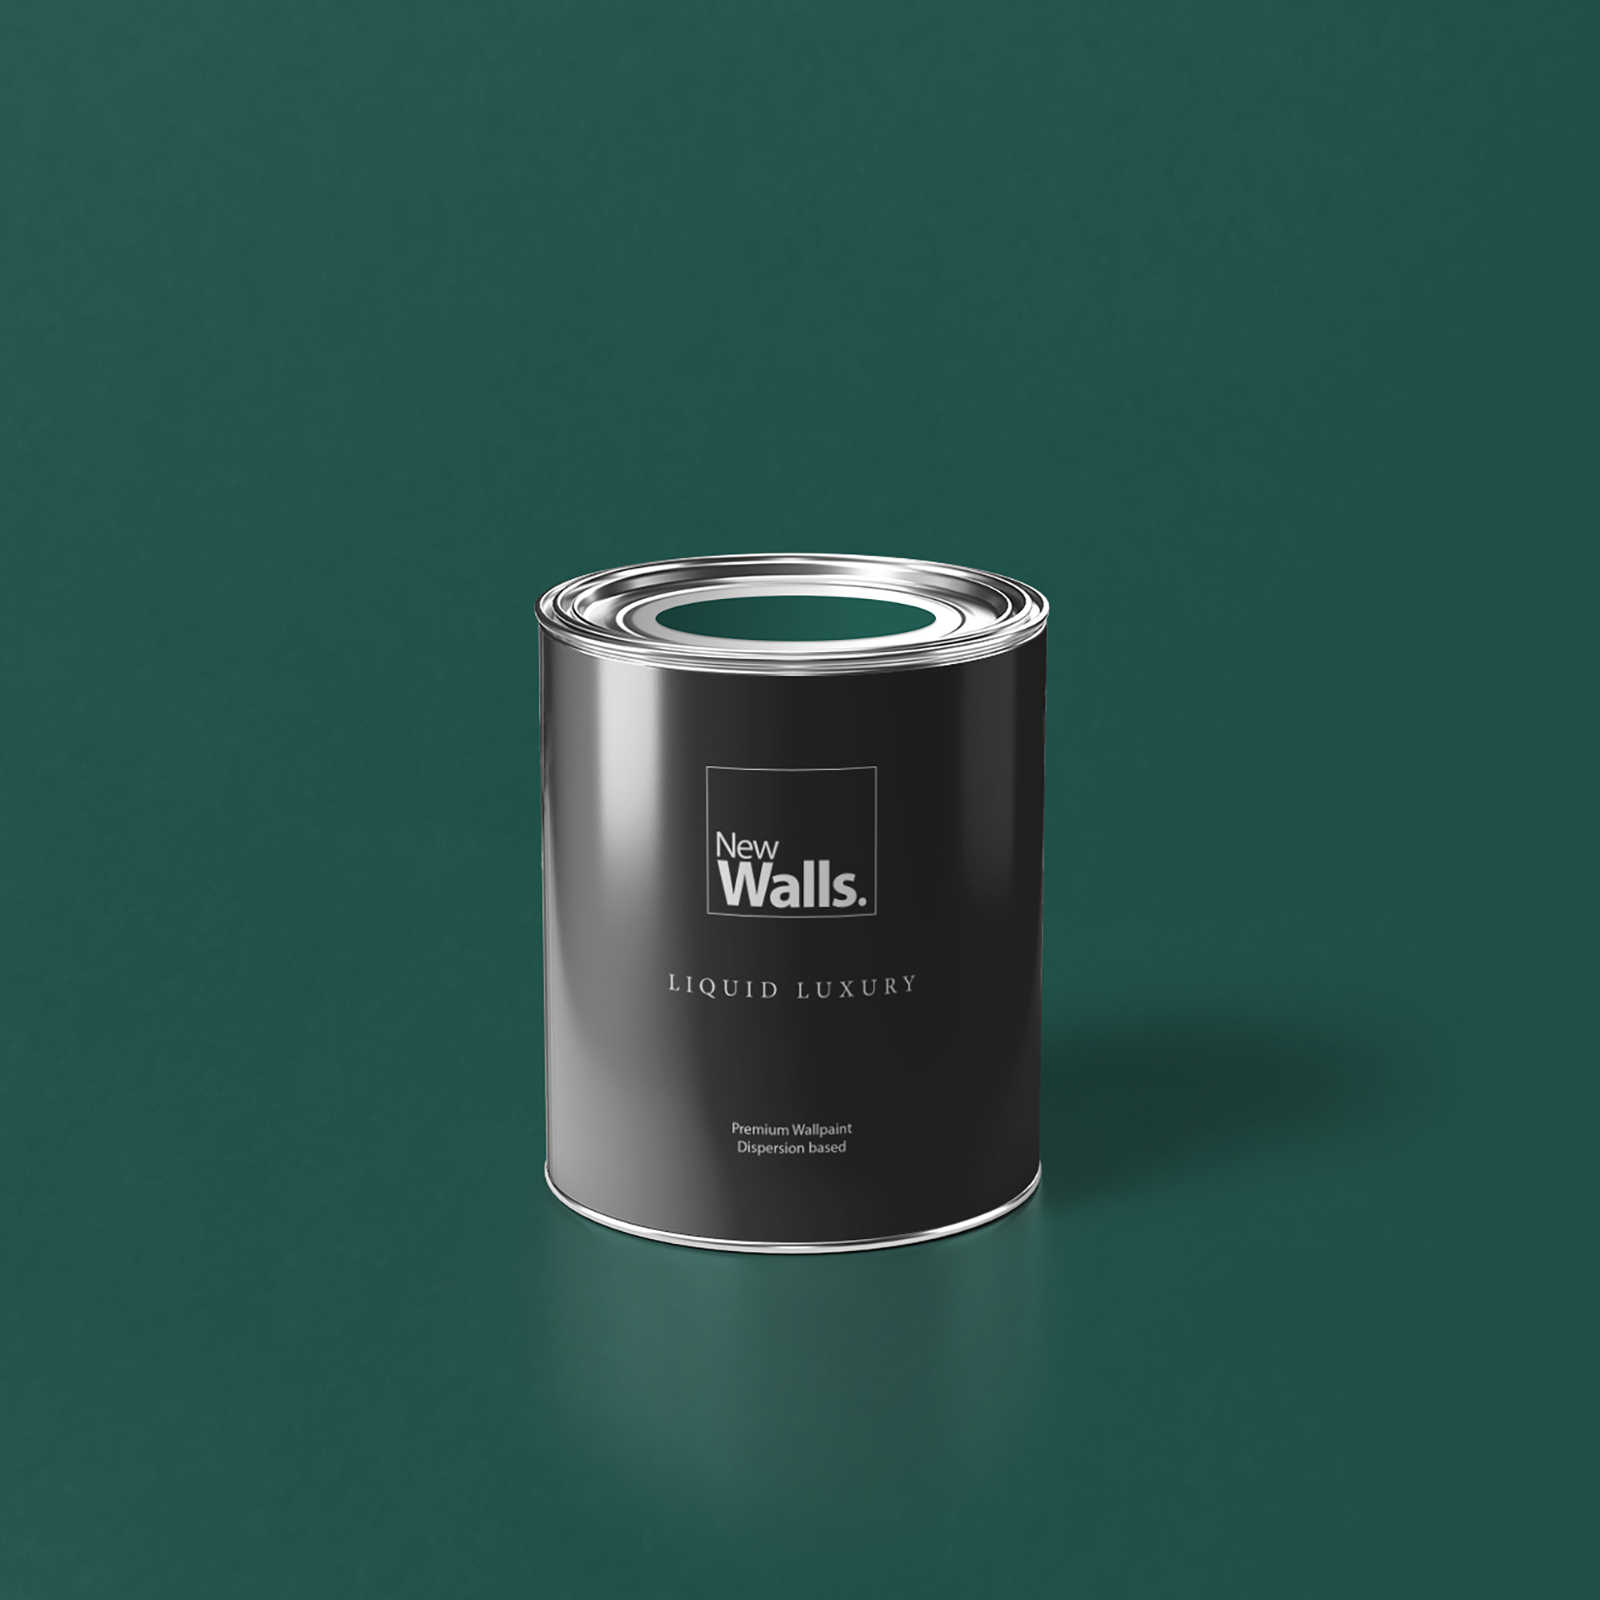         Premium Wandfarbe prachtvolles Smaragdgrün »Expressive Emerald« NW412 – 1 Liter
    